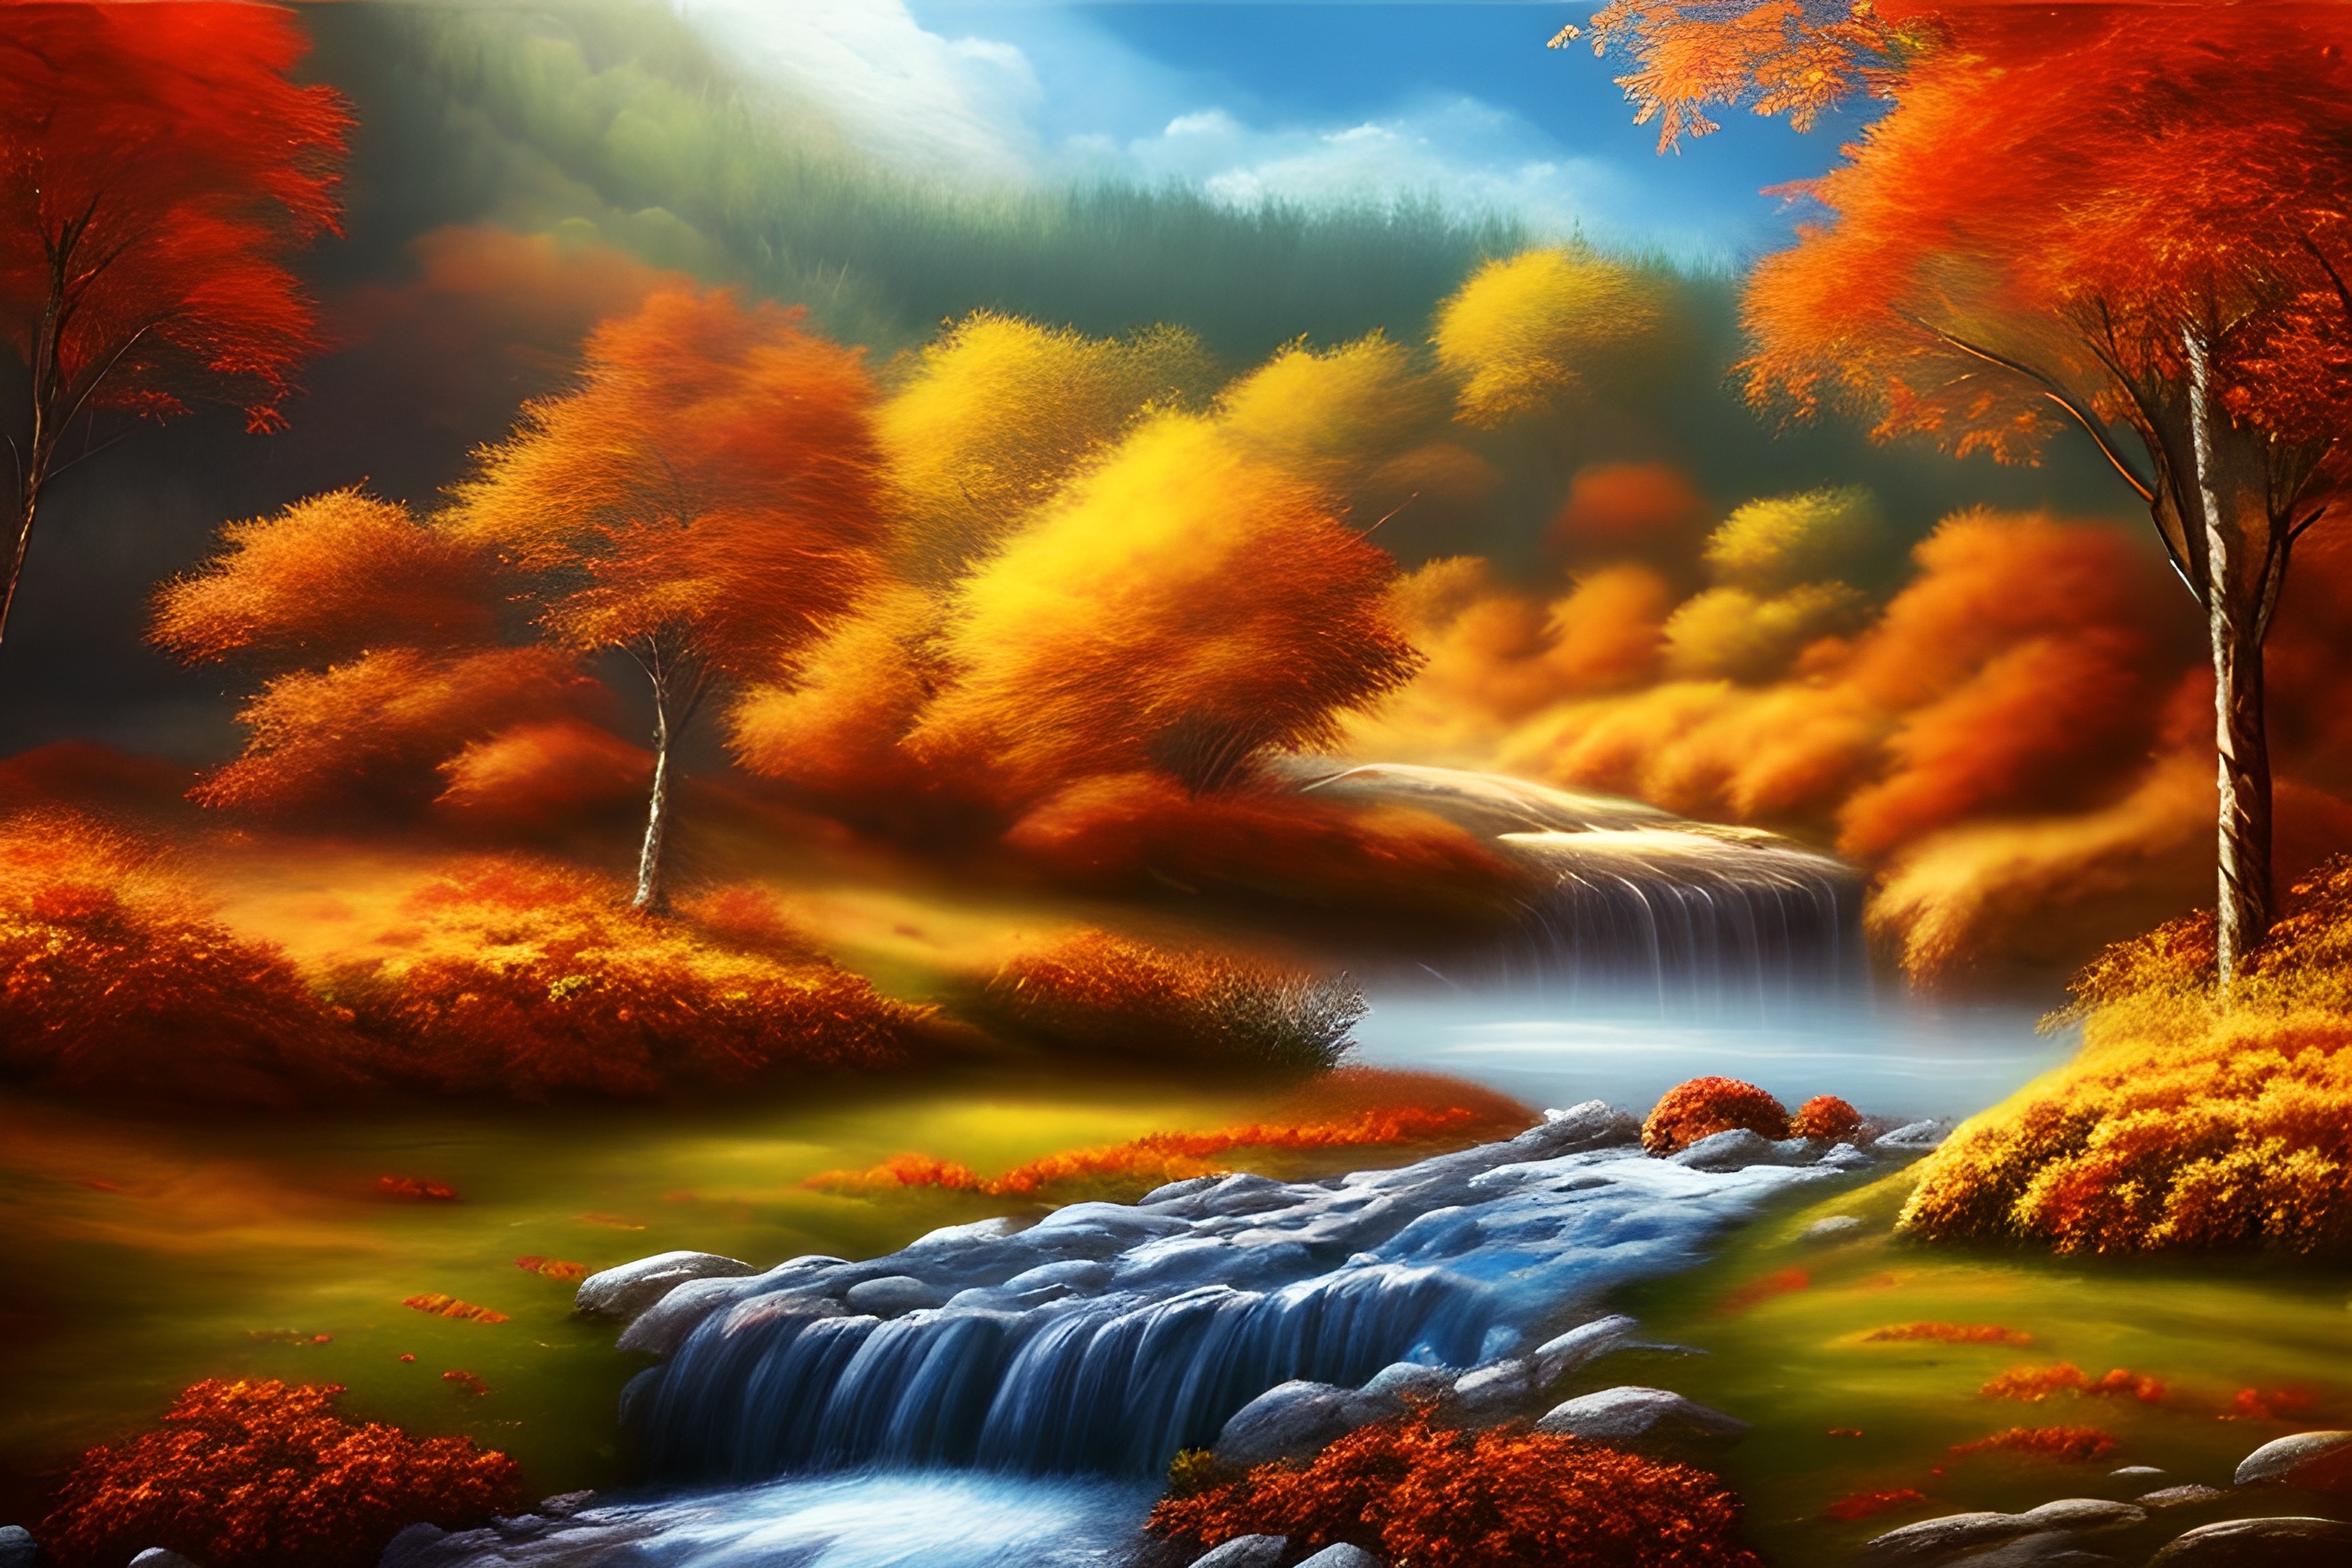 Autumn Scenery Landscape Background Graphic by Fstock · Creative Fabrica